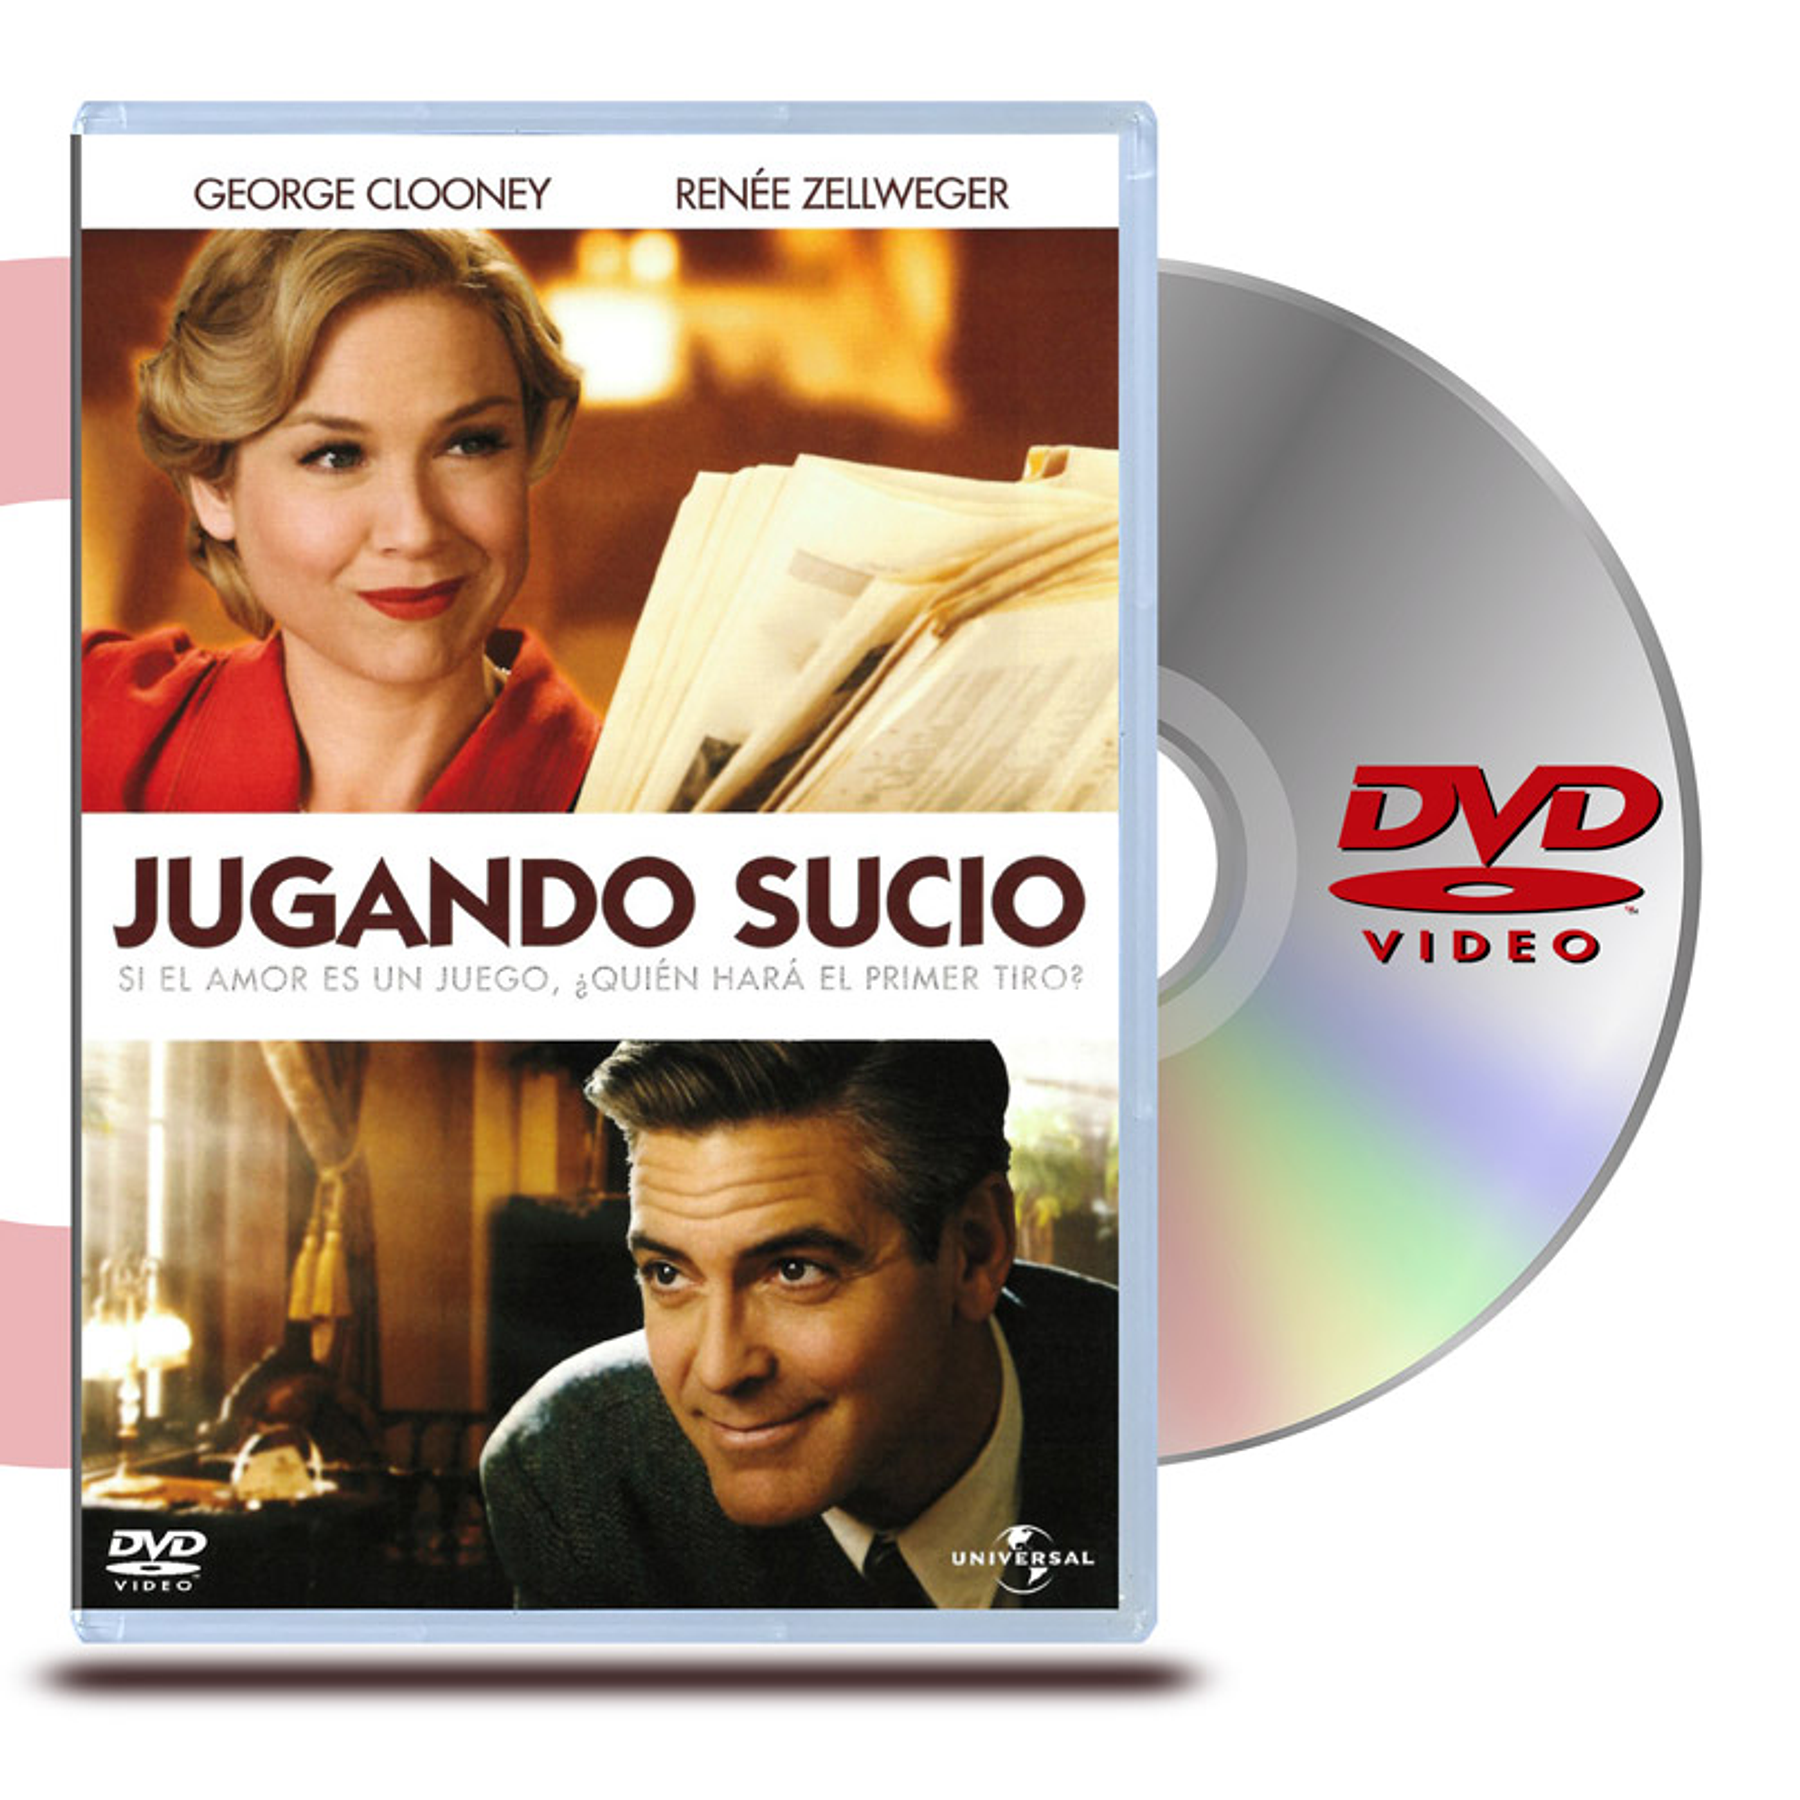 DVD JUGANDO SUCIO - LEATHERHEADS